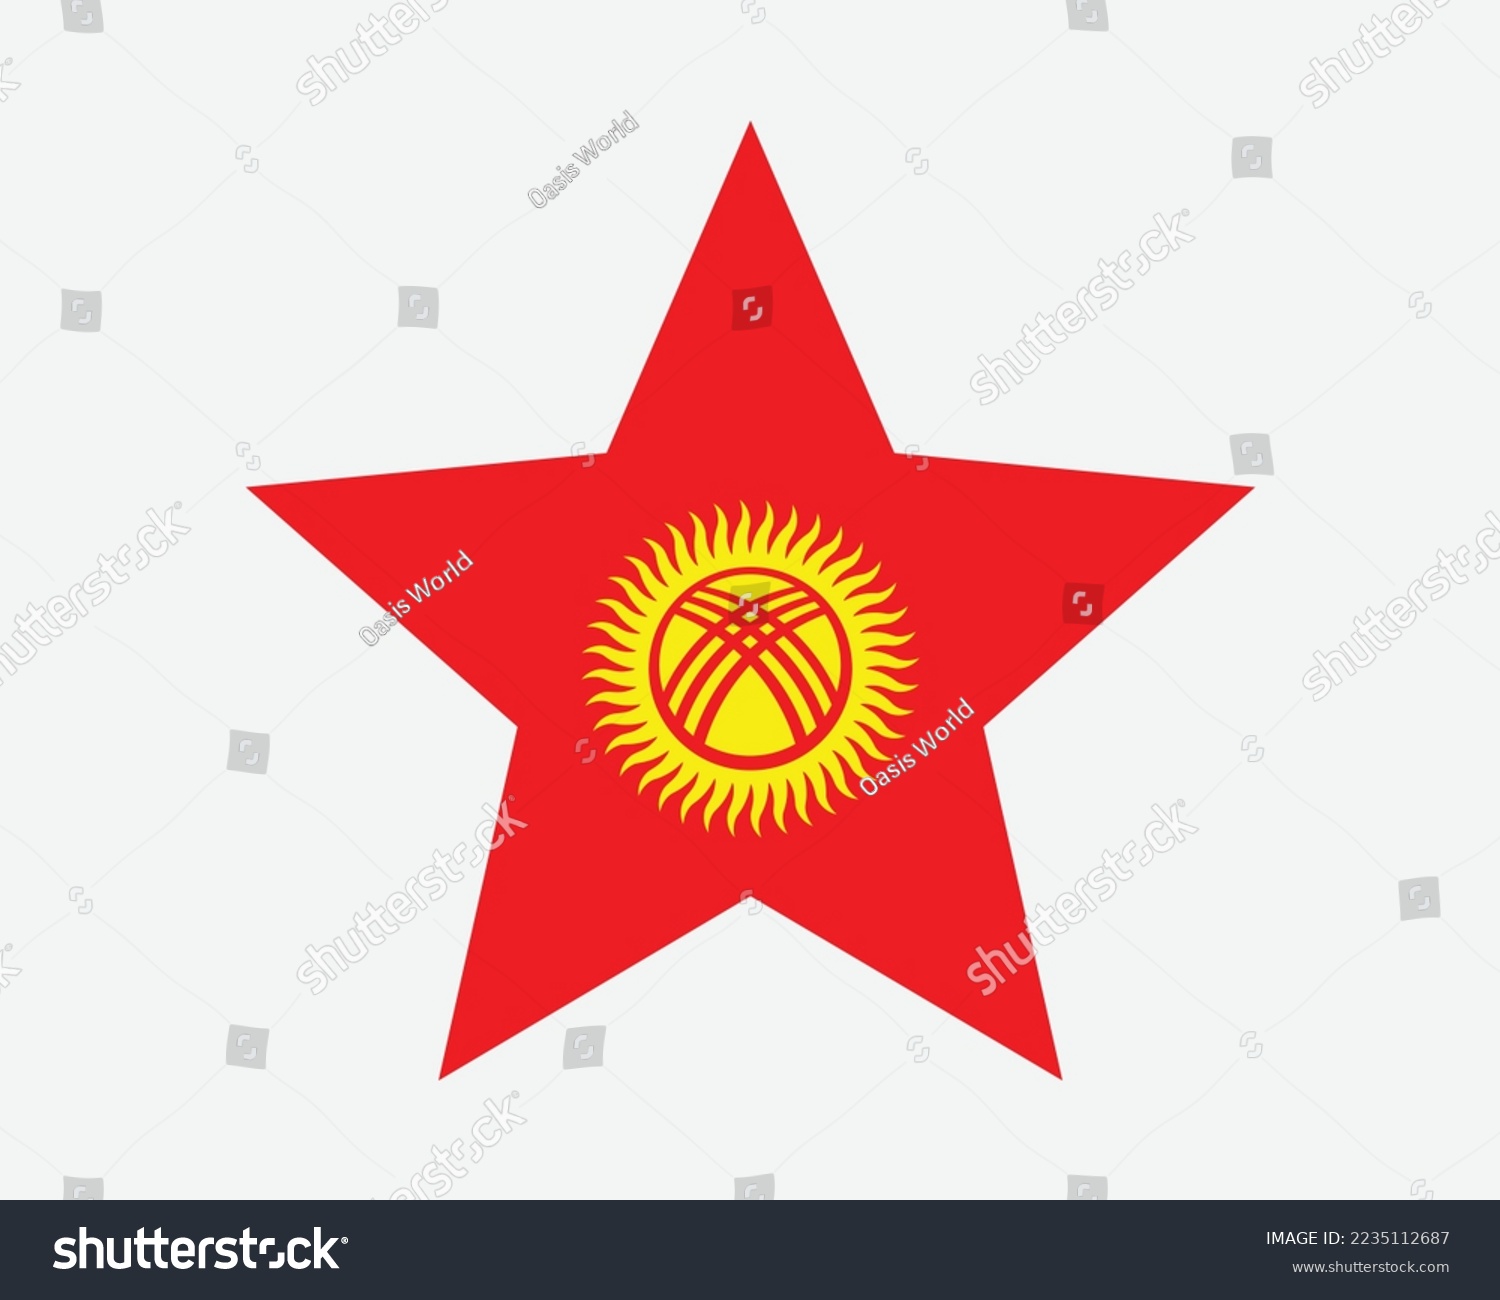 SVG of Kyrgyzstan Star Flag. Kyrgyz Republic Star Shape Flag. Country National Banner Icon Symbol Vector Flat Artwork Graphic Illustration svg